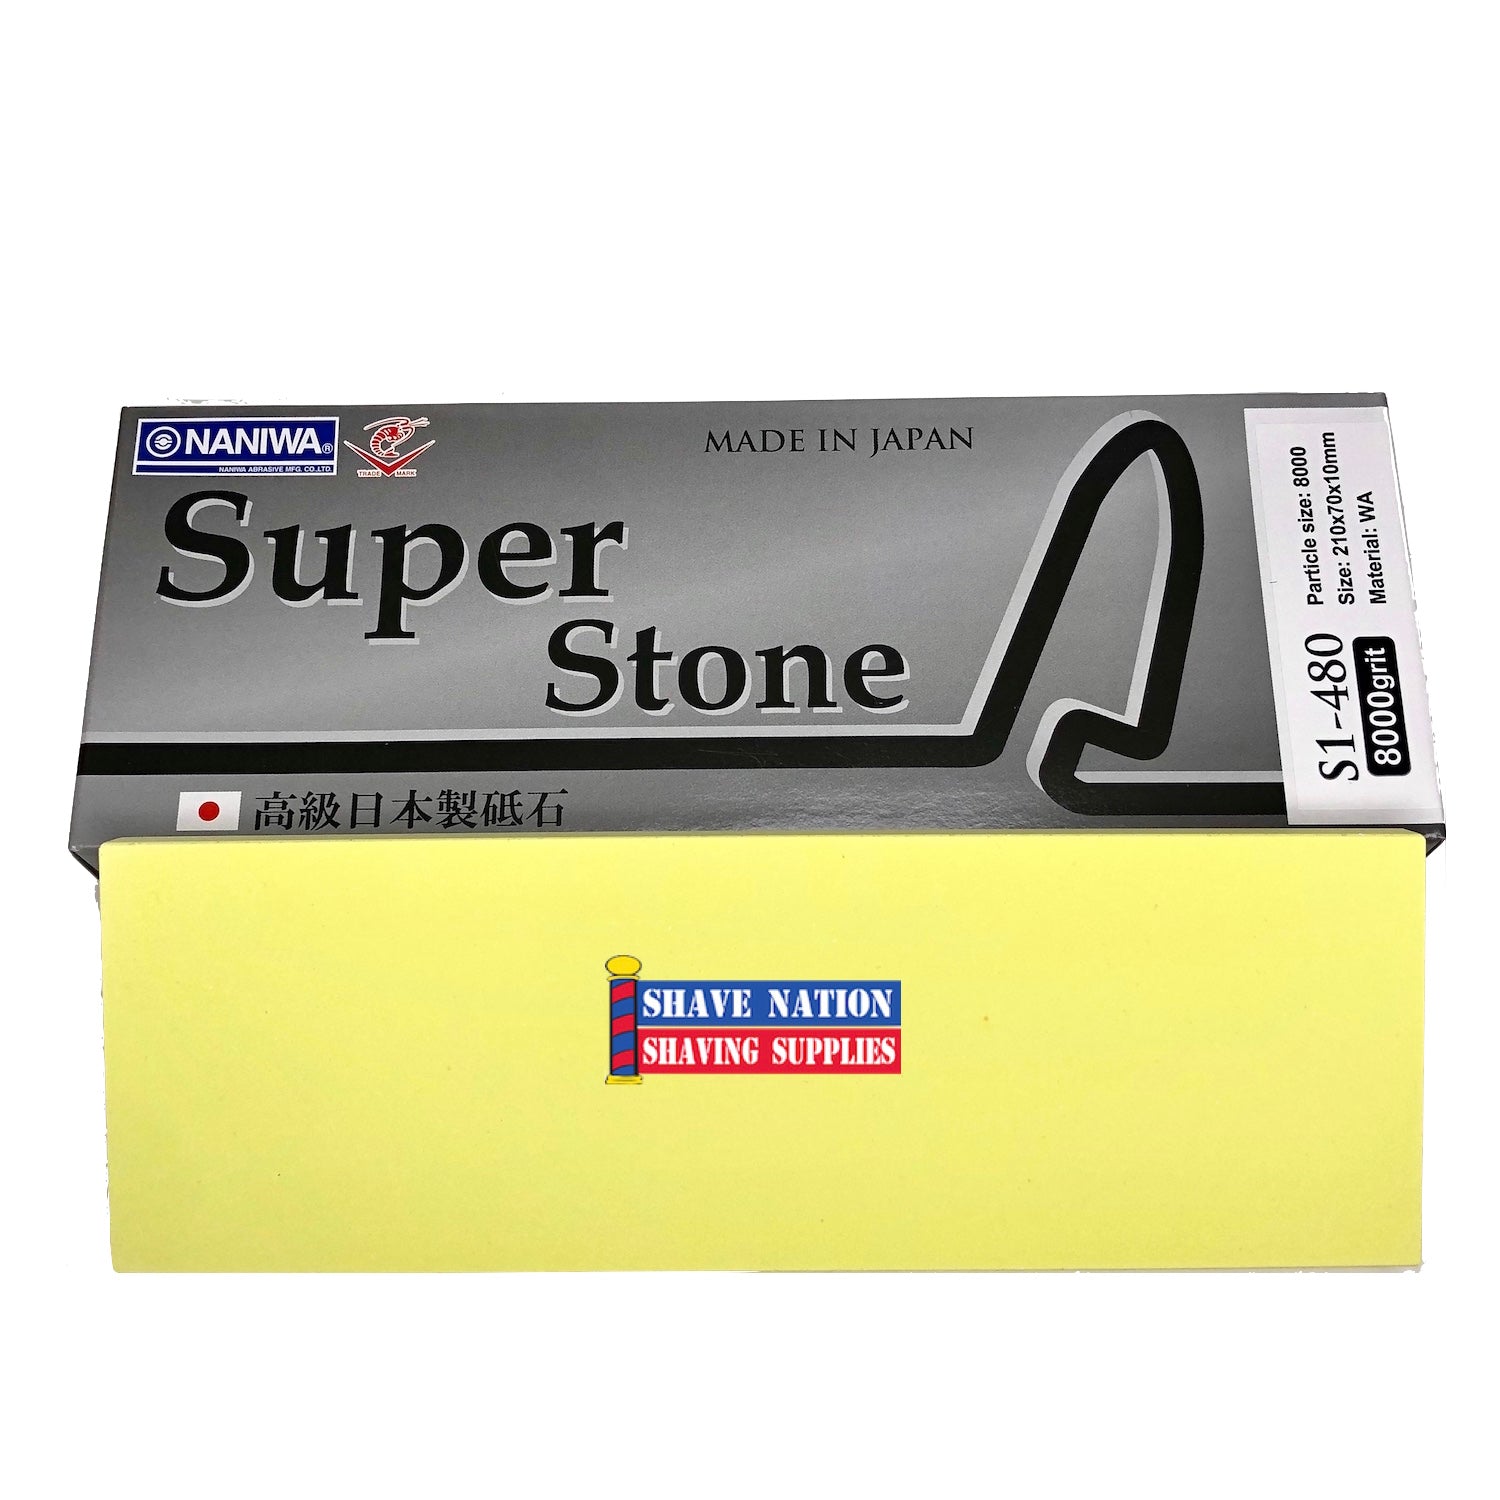 Naniwa 8,000 Grit Super Stone S1-480